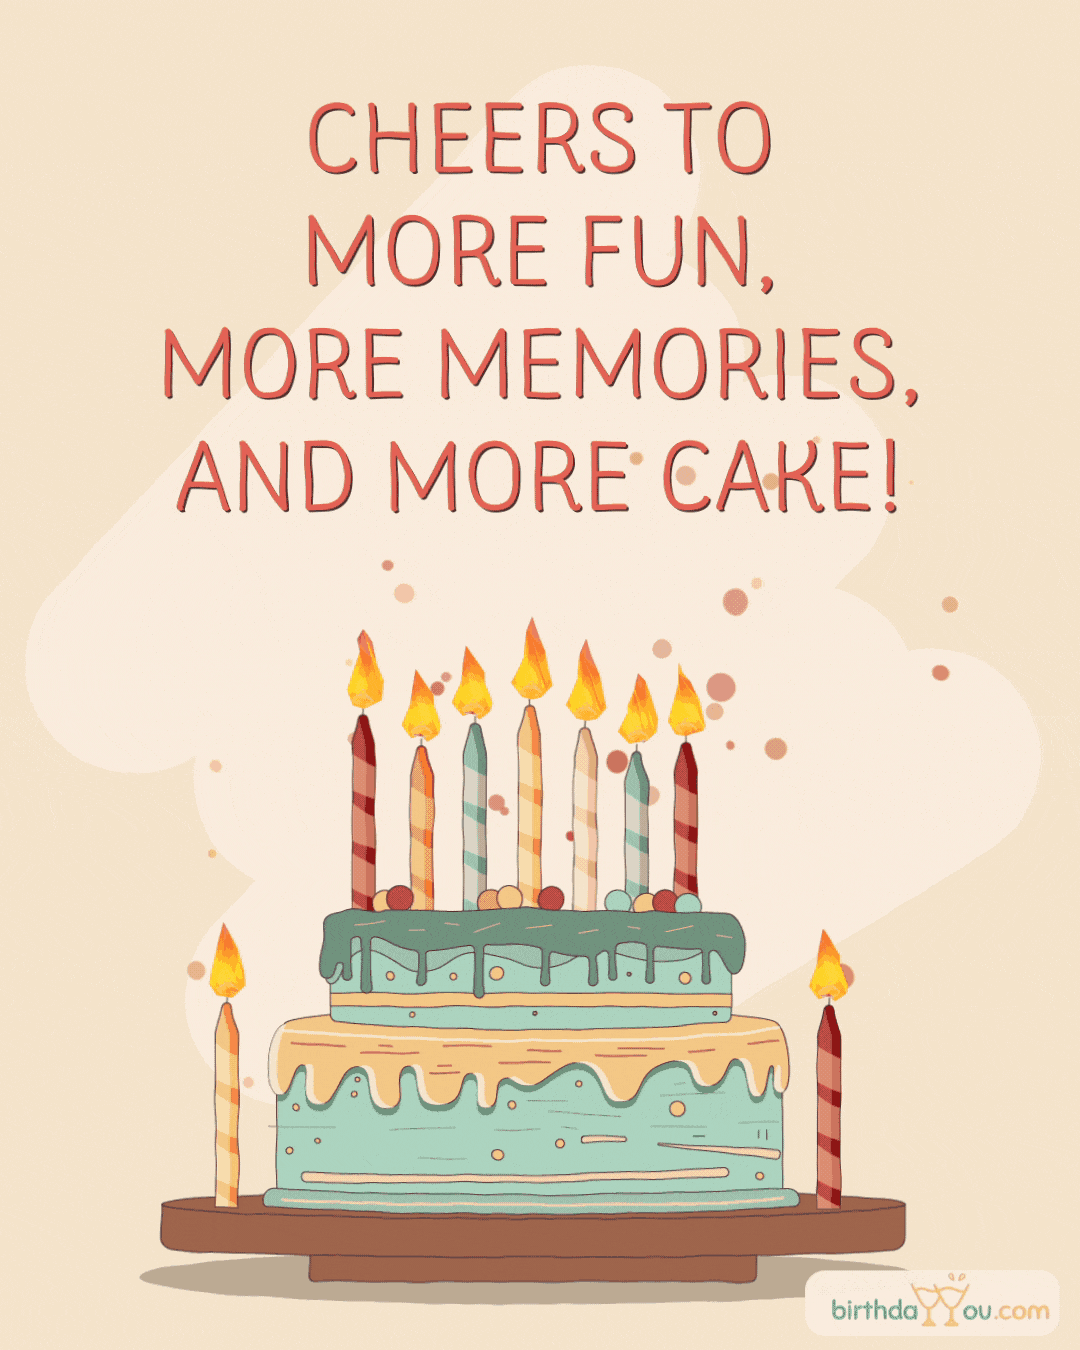 Free Happy Birthday Animated Gif Image with Cake - birthdayimg.com